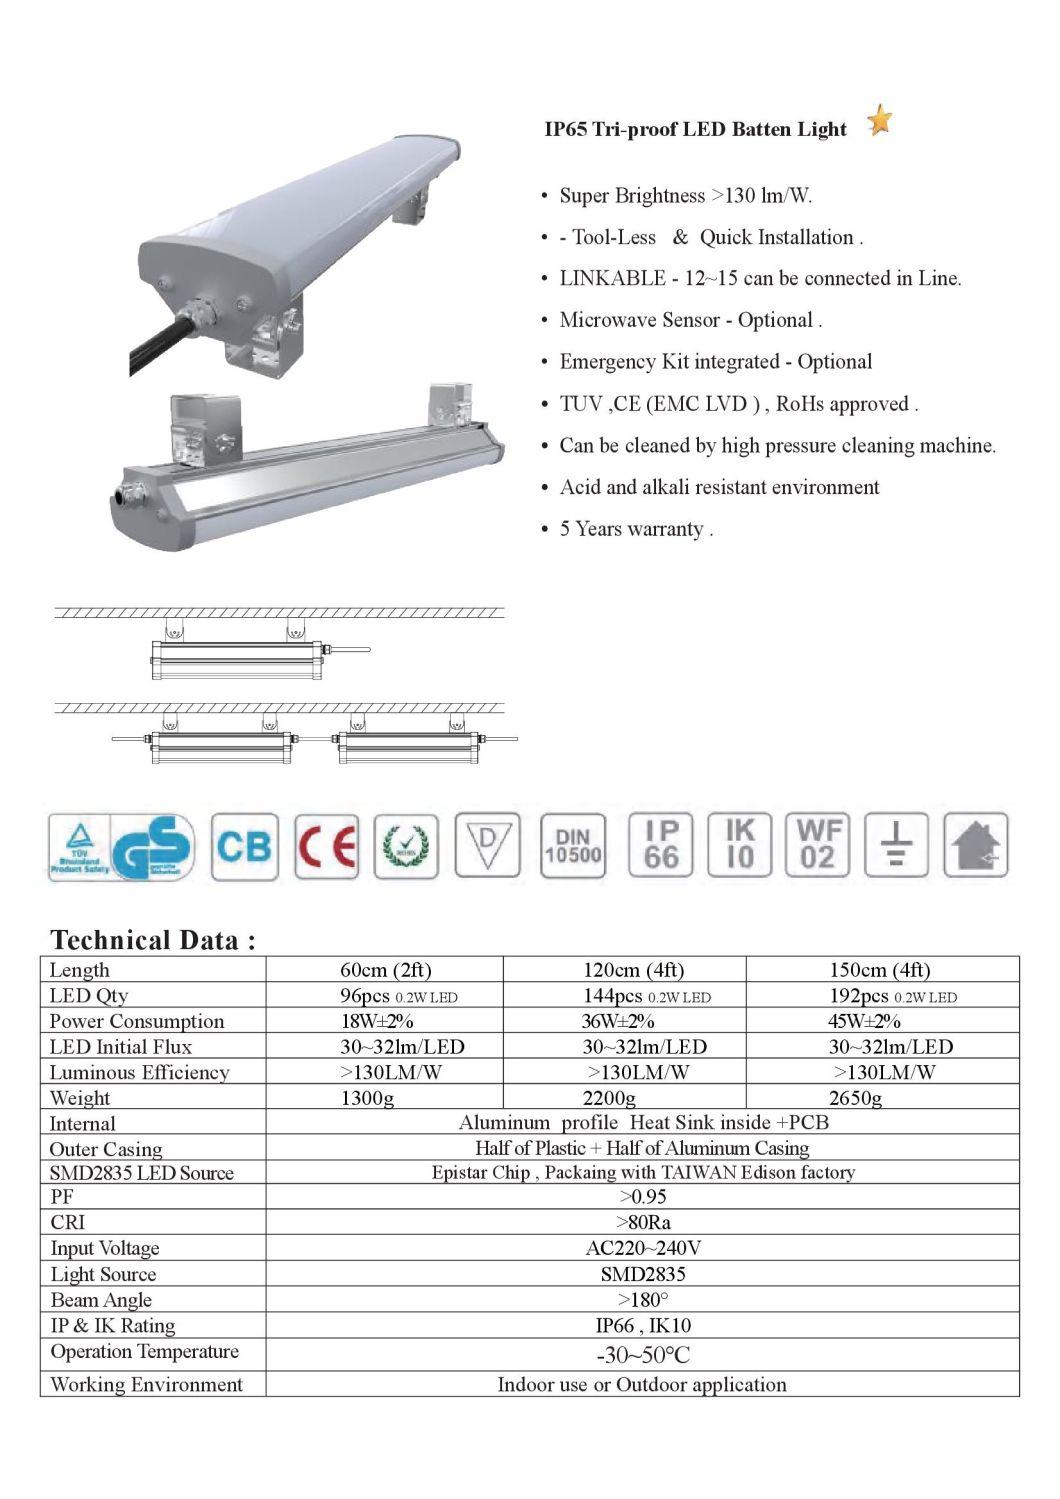 4FT 1200mm Industrial IP65 Workshop LED Triproof Light (Microwave/motion sensor also available)